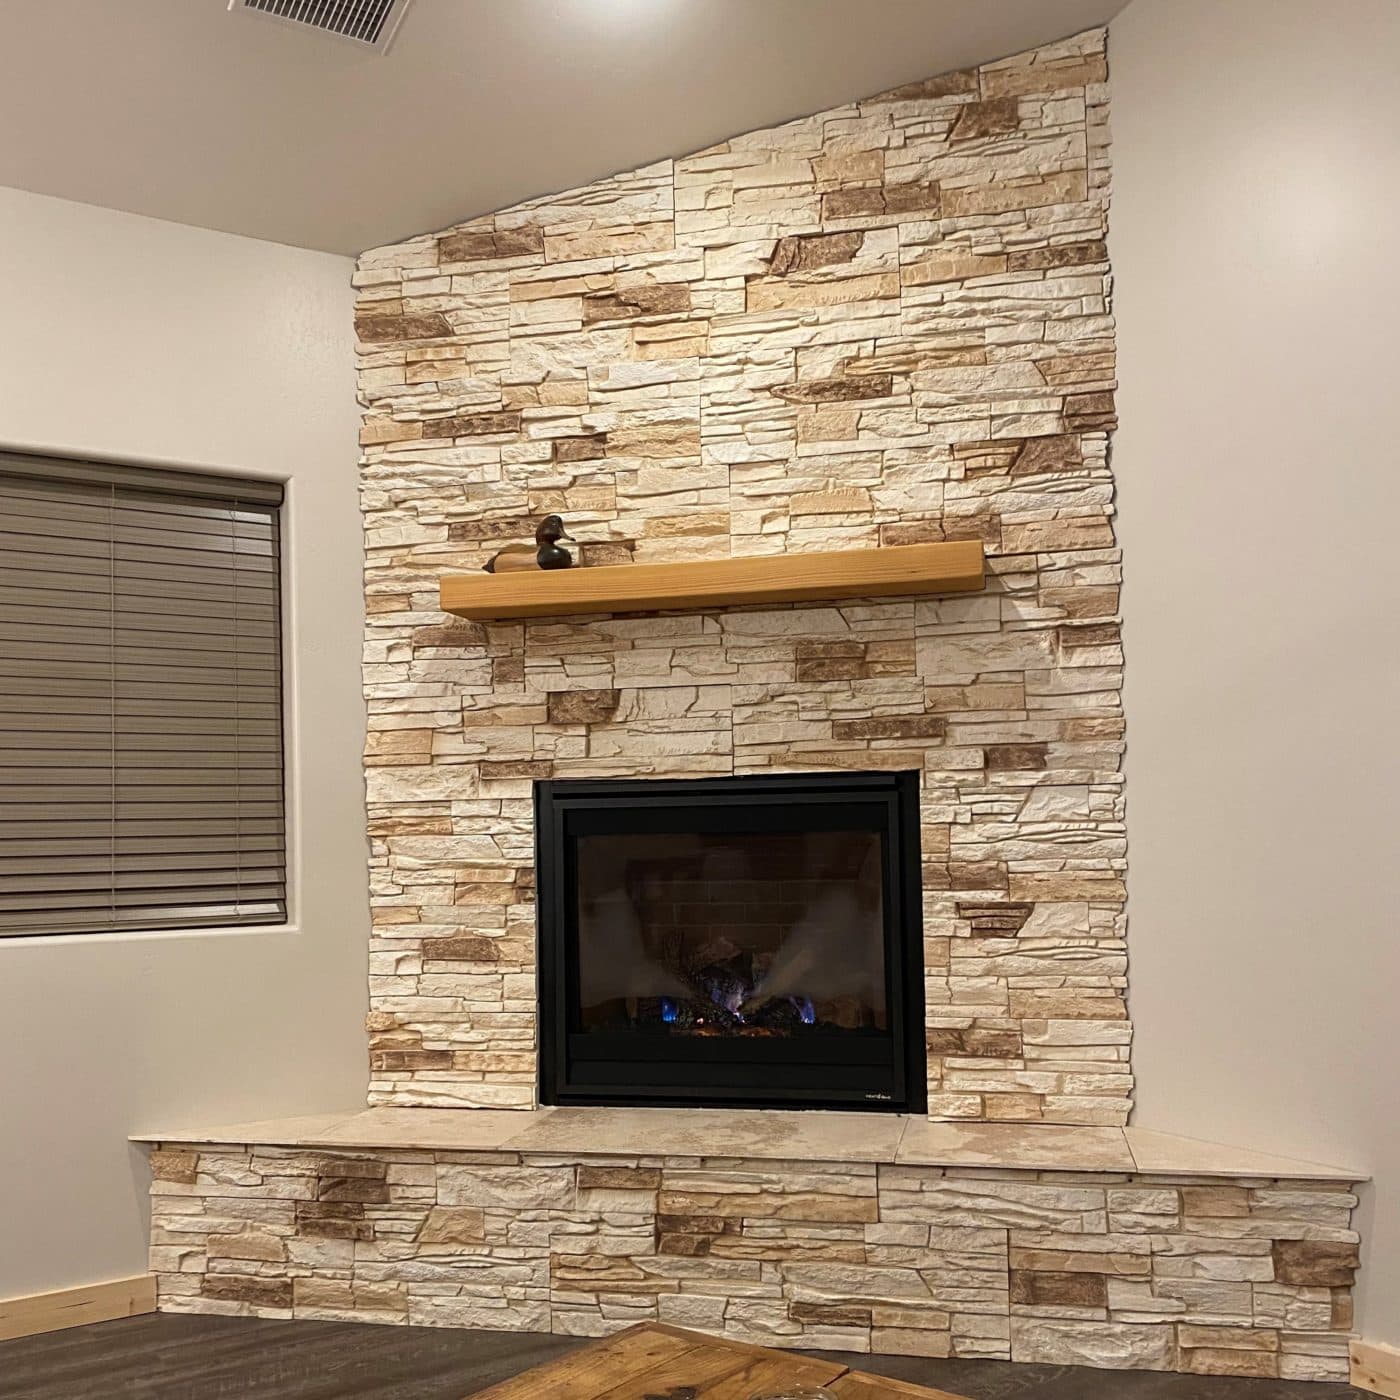 Vanilla Bean corner fireplace design with stacked stone